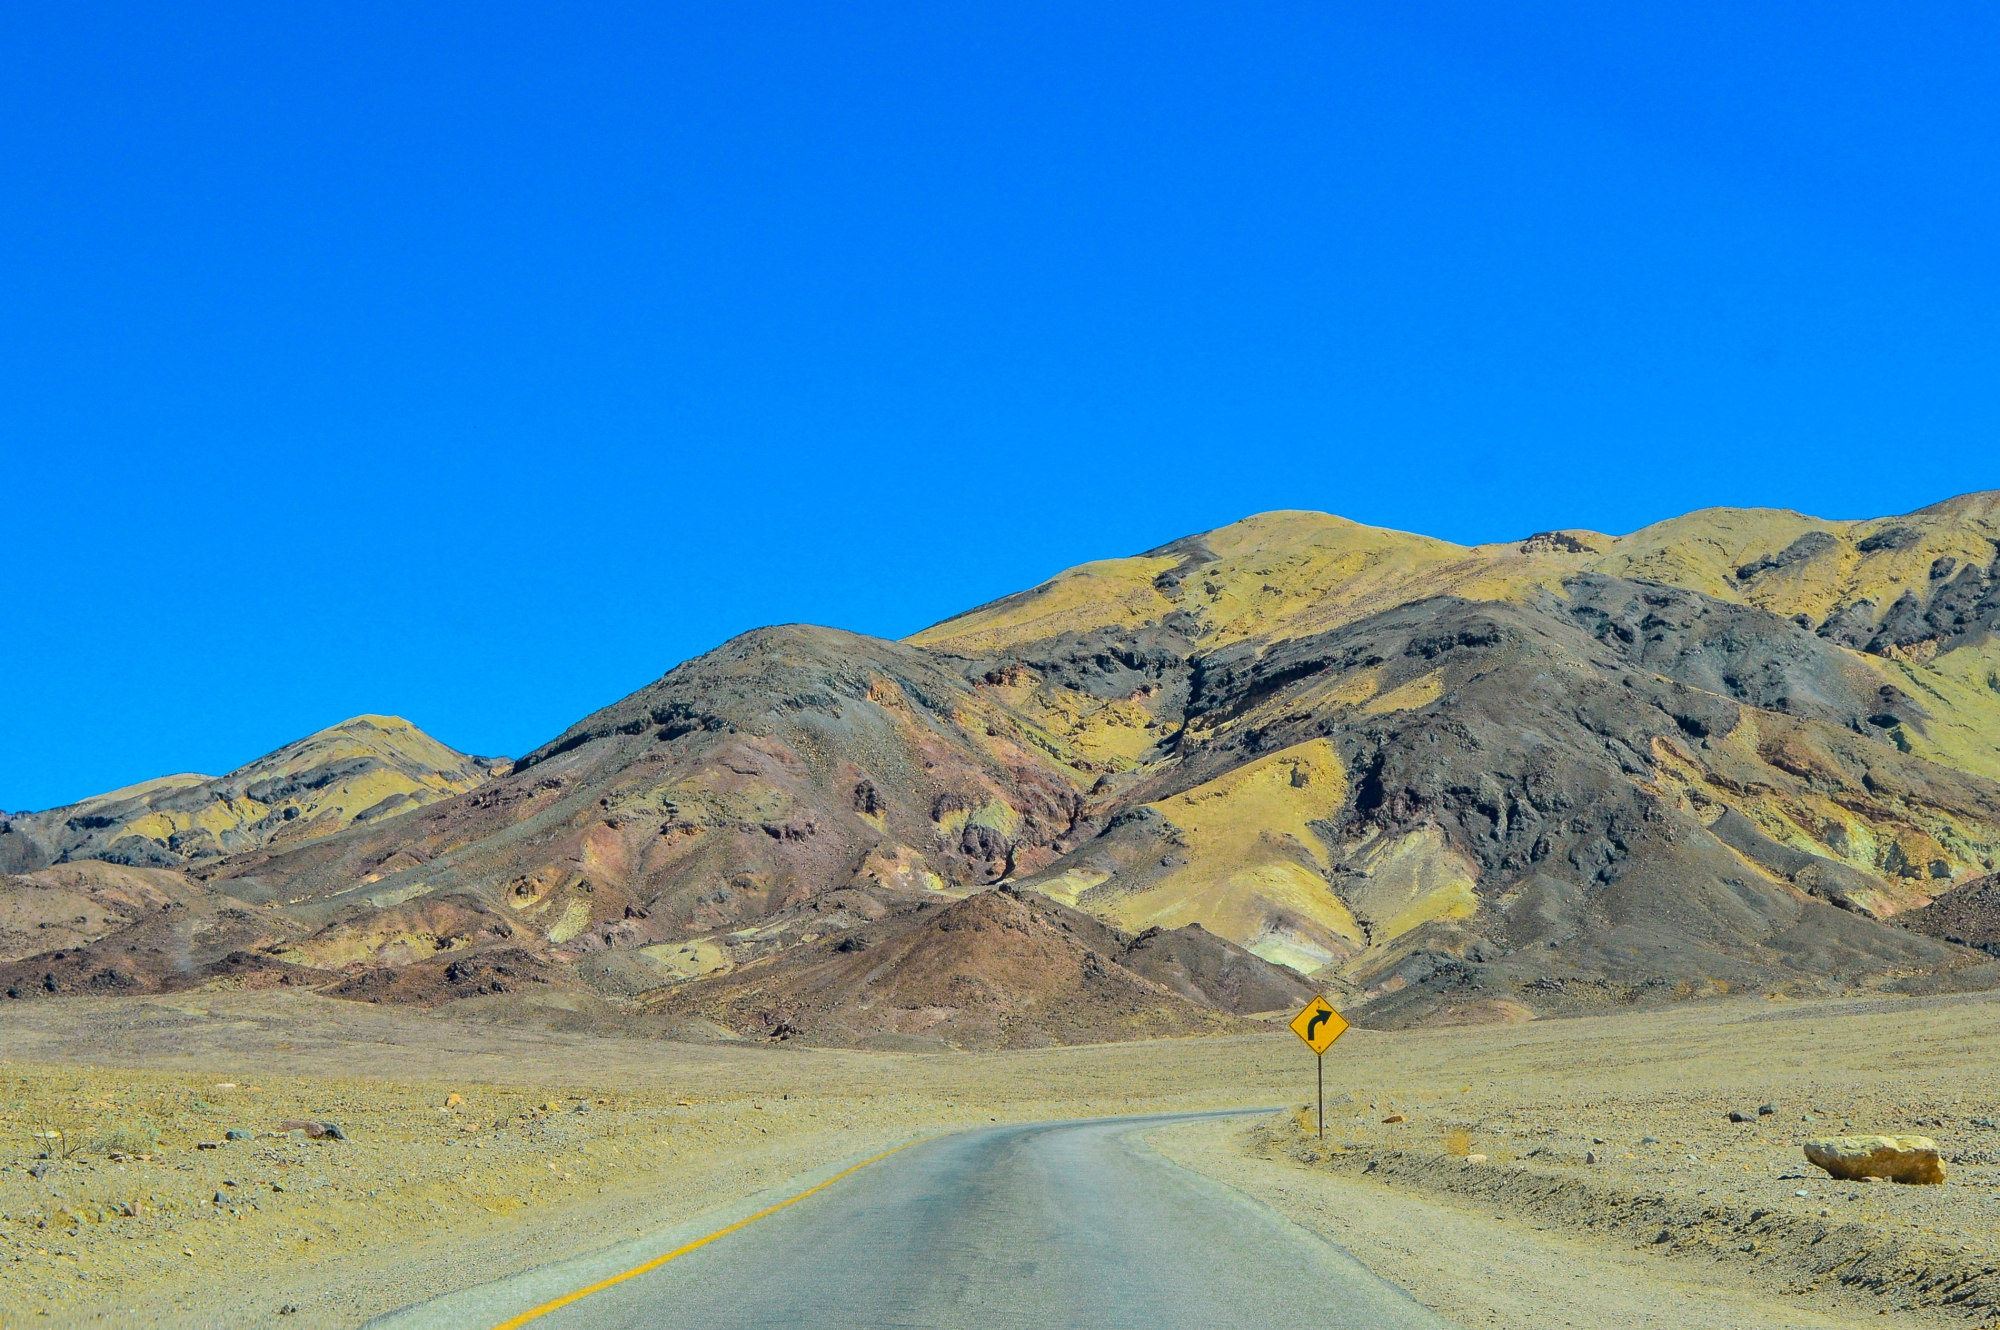 Artist's Drive Death Valley National Park